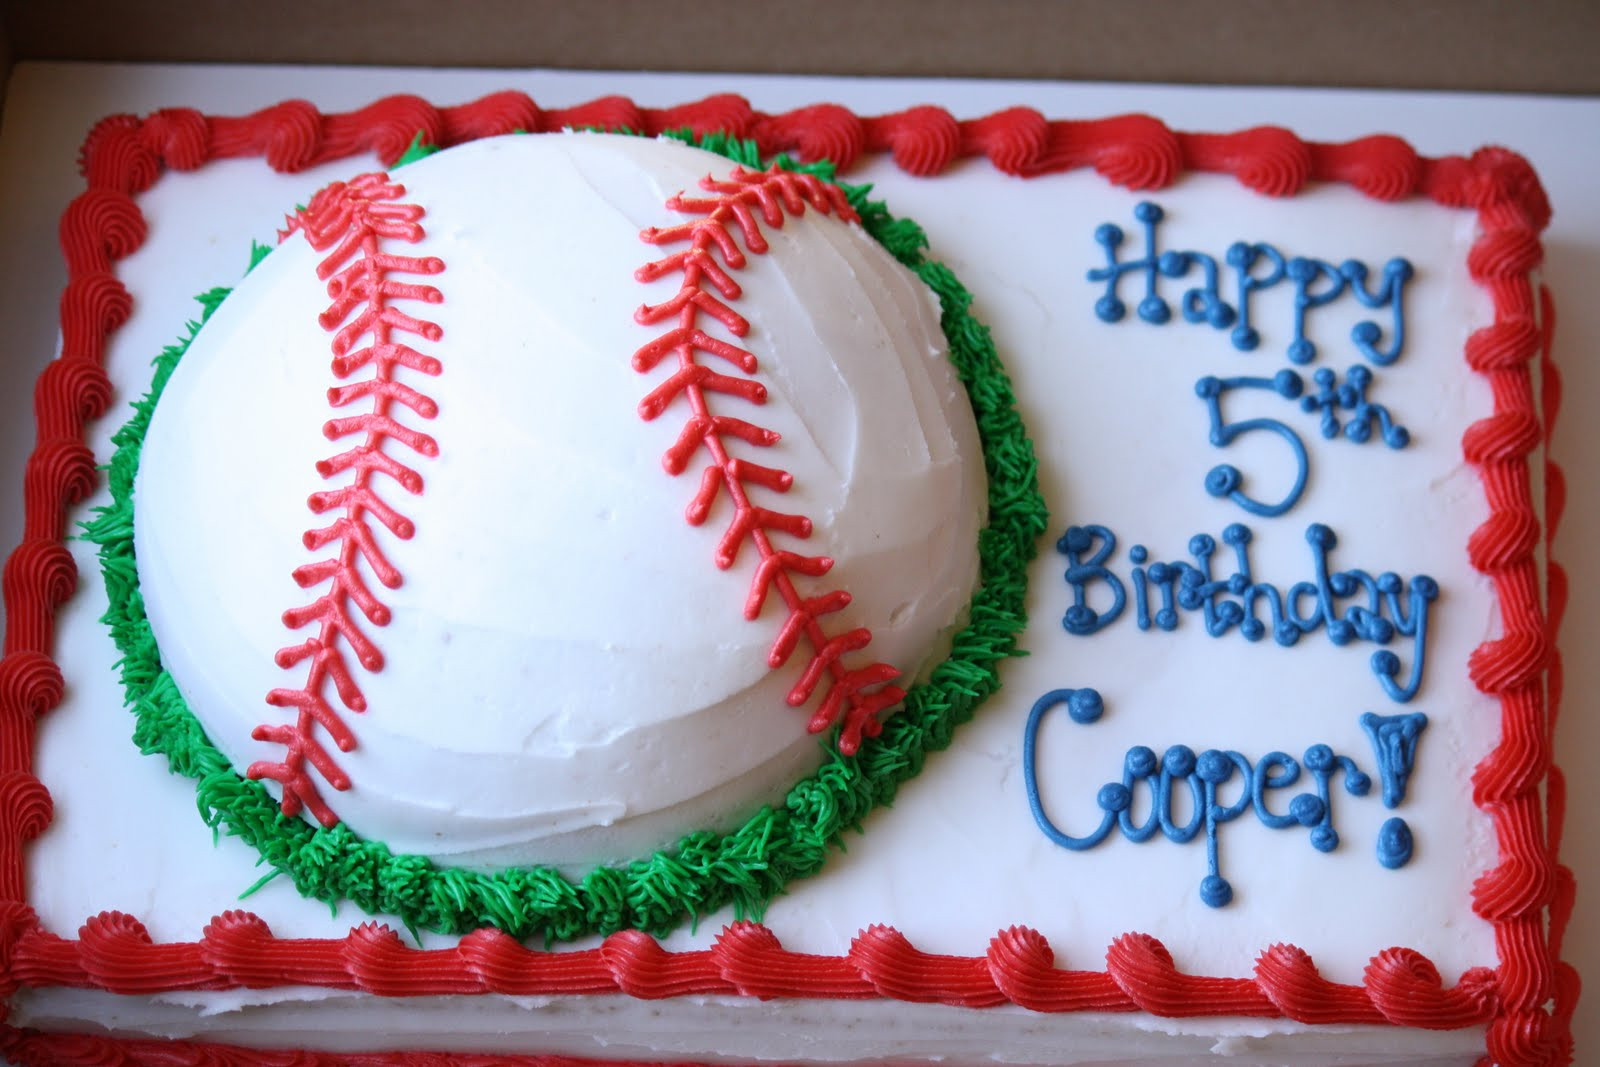 Baseball Birthday Cakes
 A Perfect Bite Cooper s 5th Birthday Baseball Cake